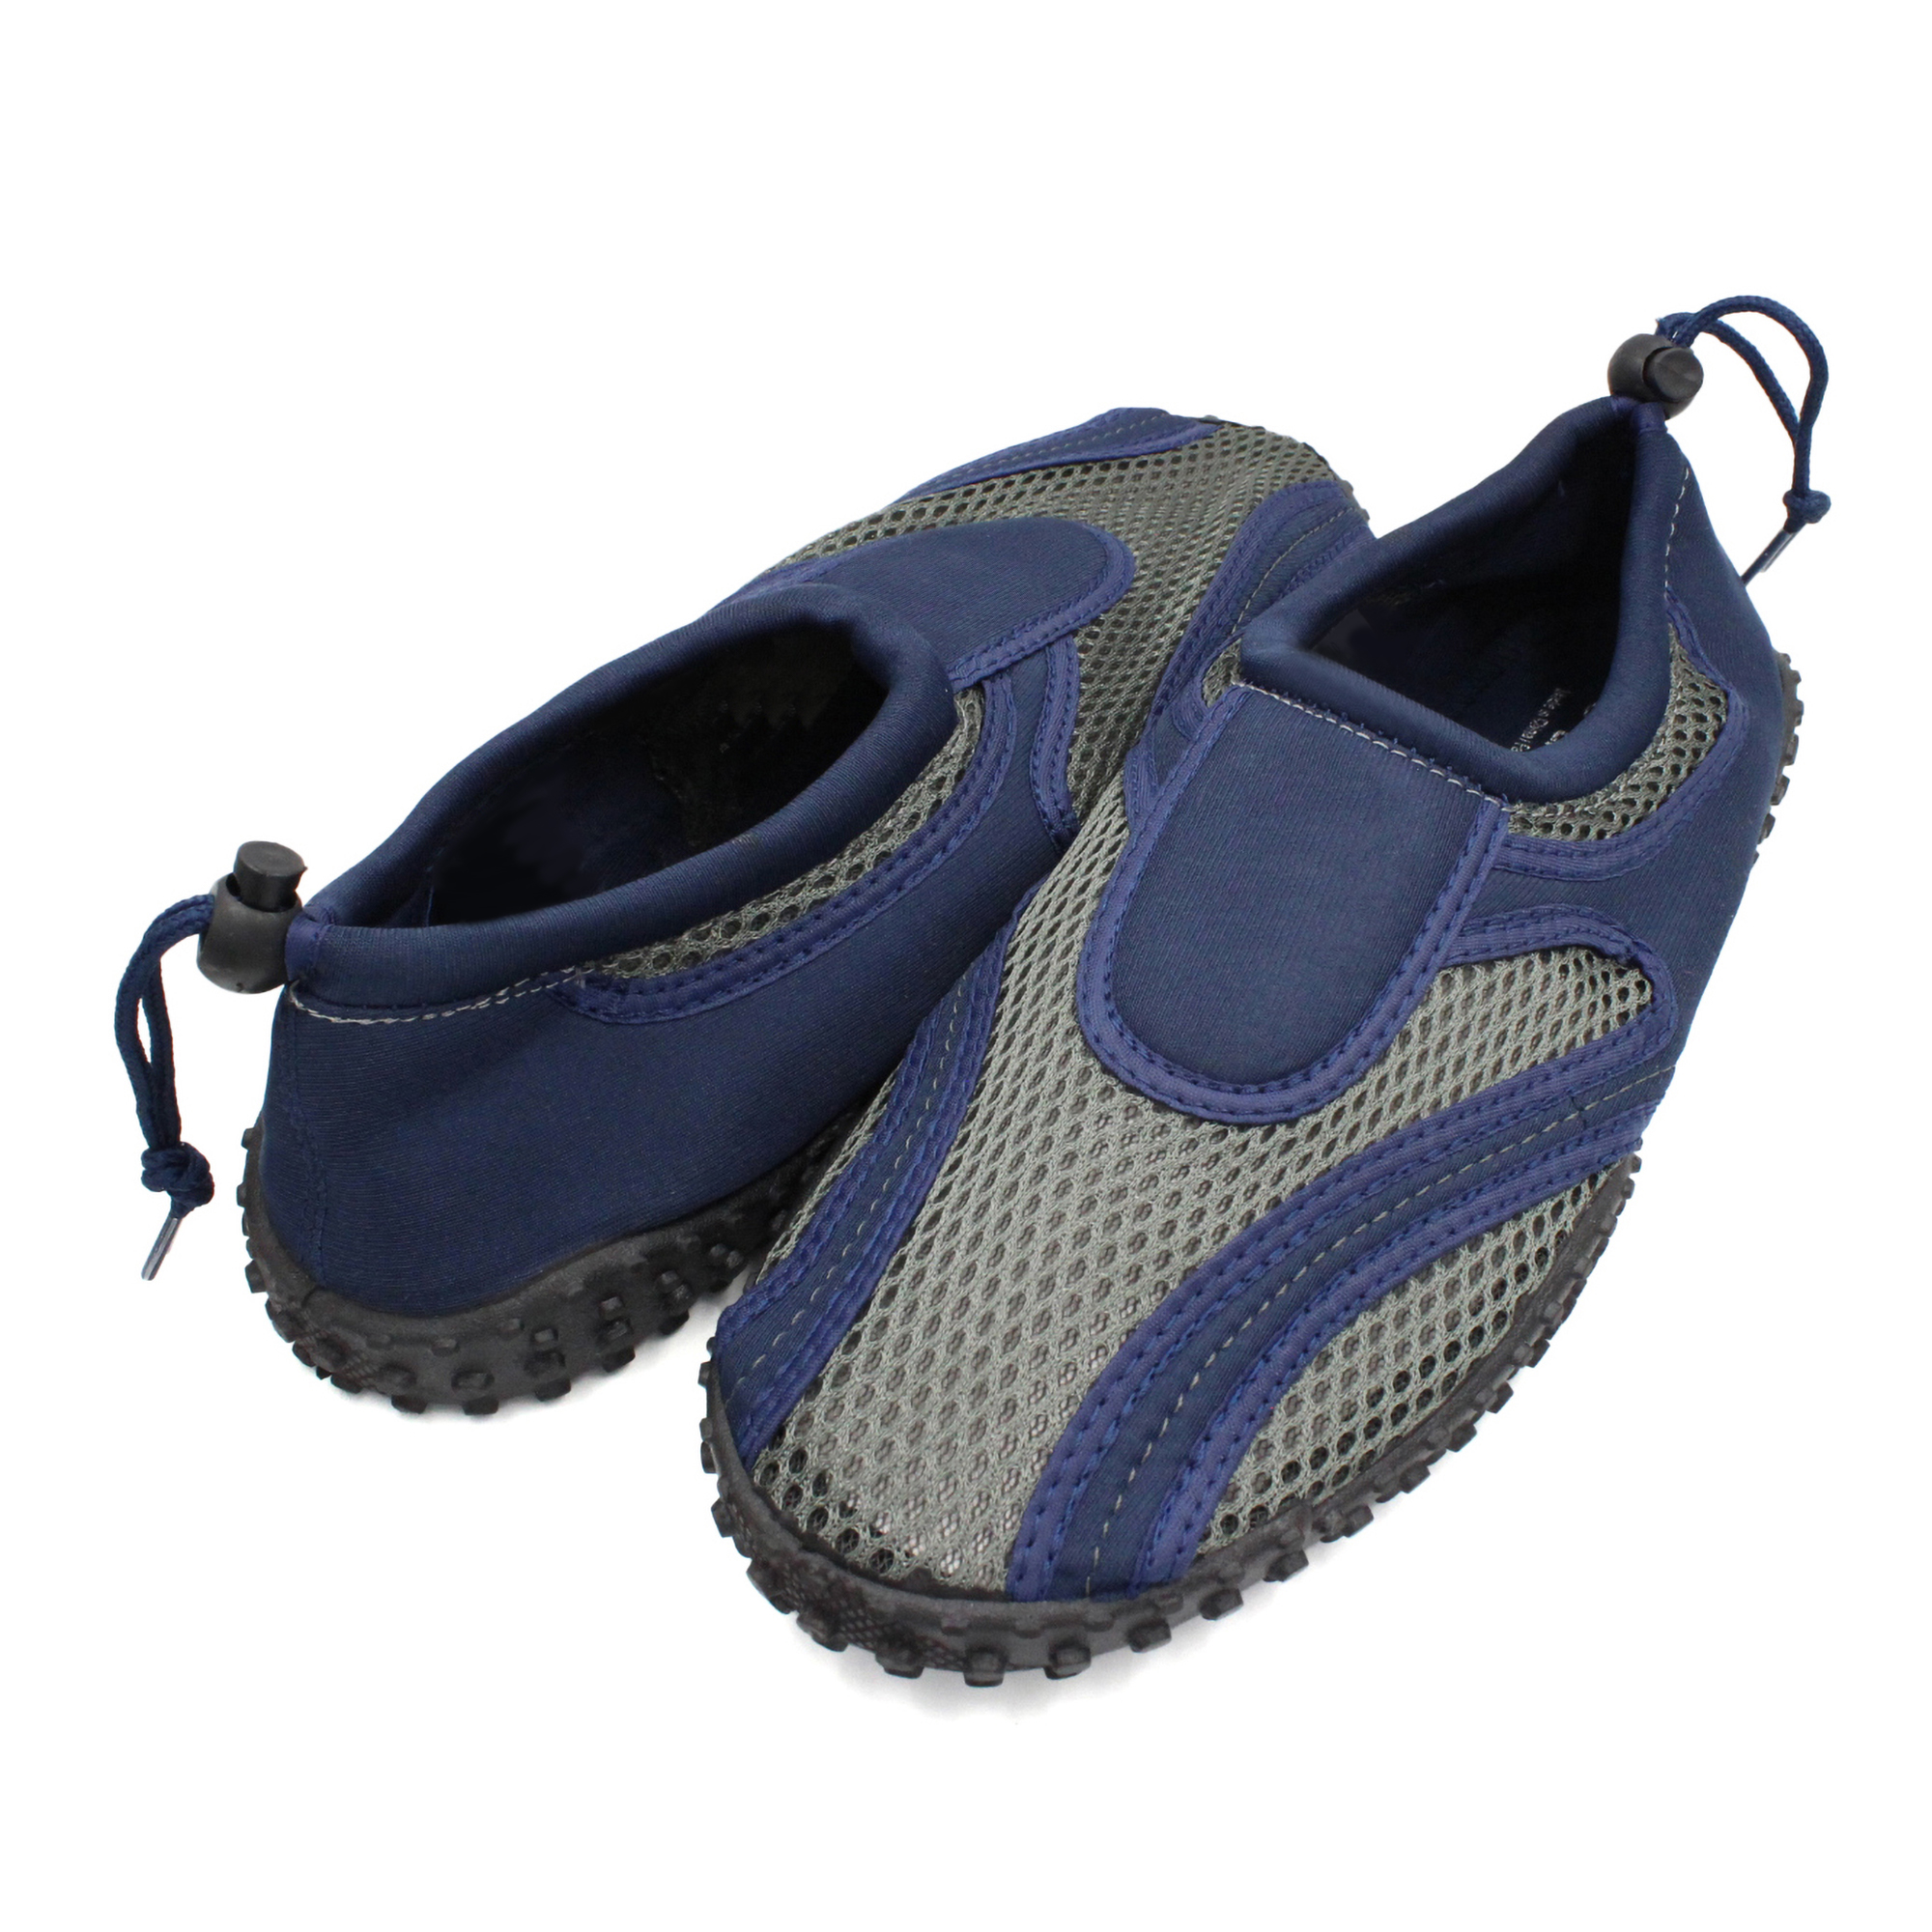 Ventana Men's Water Shoes Beach Aqua Sock Quick Dry Pool Slip On Sandals - image 3 of 5